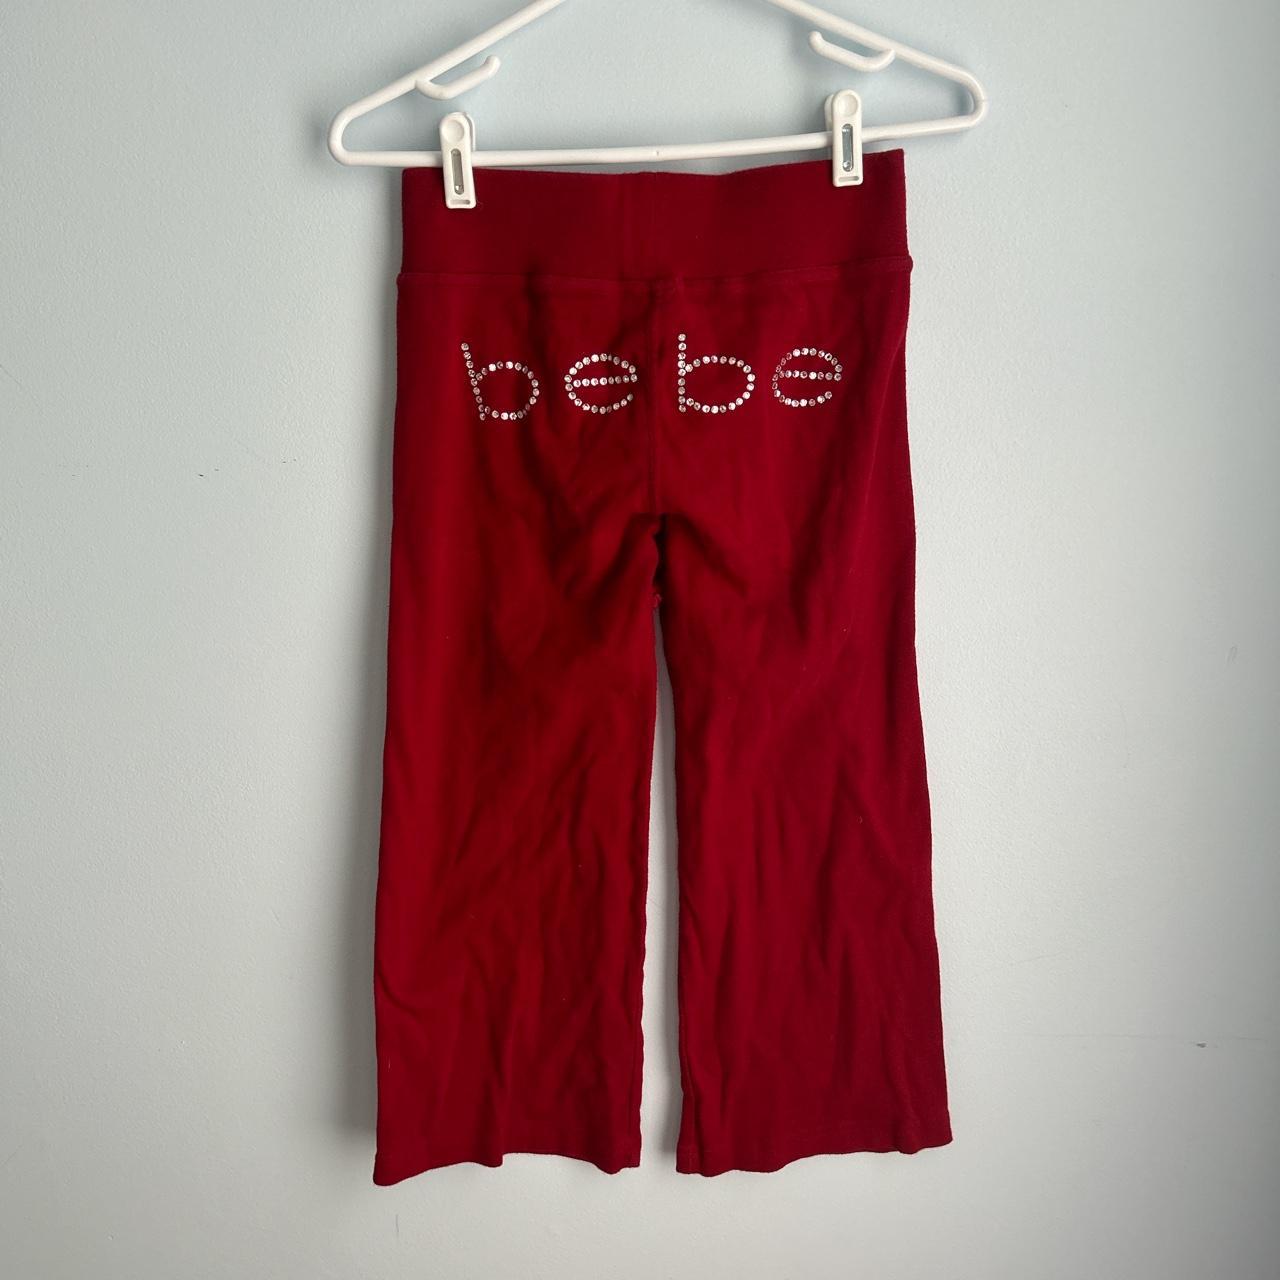 Vintage Women's Sweatpants - Red - XS